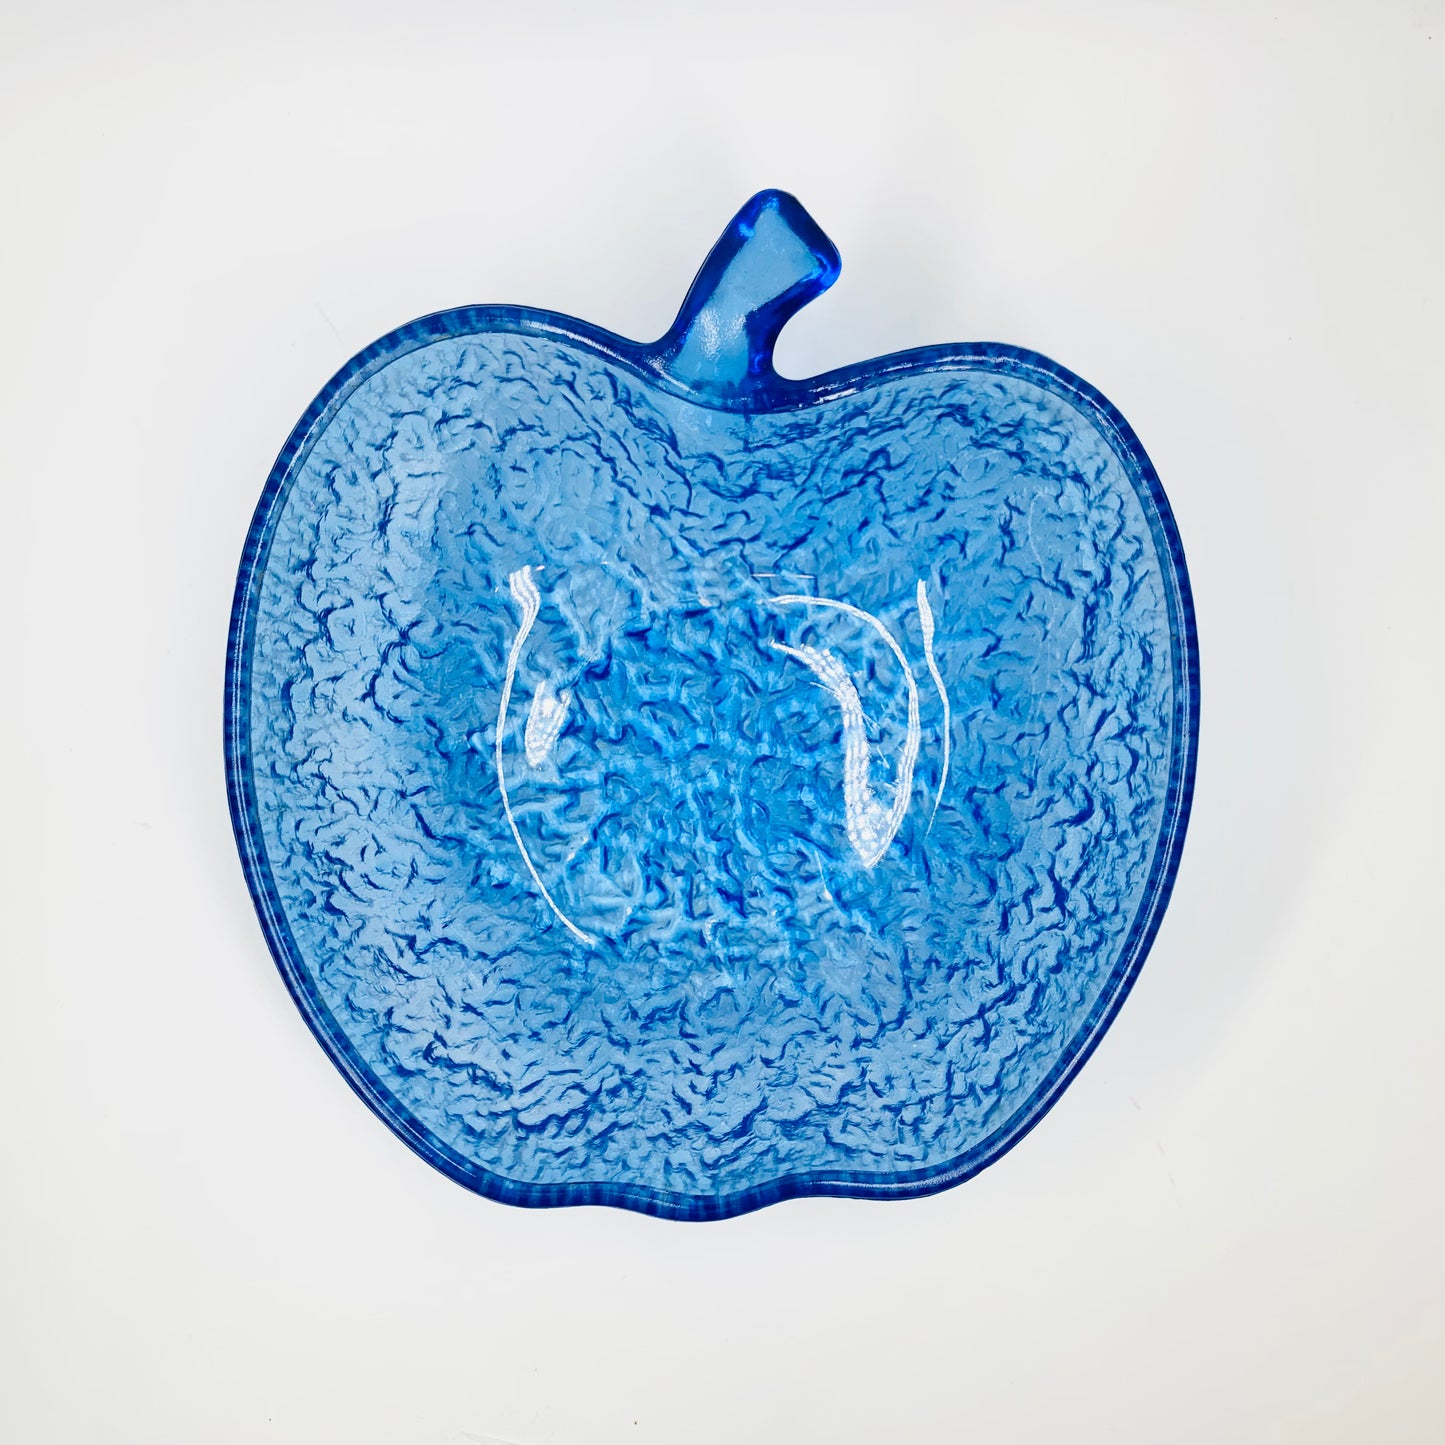 Retro apple shaped blue ice glass bowls